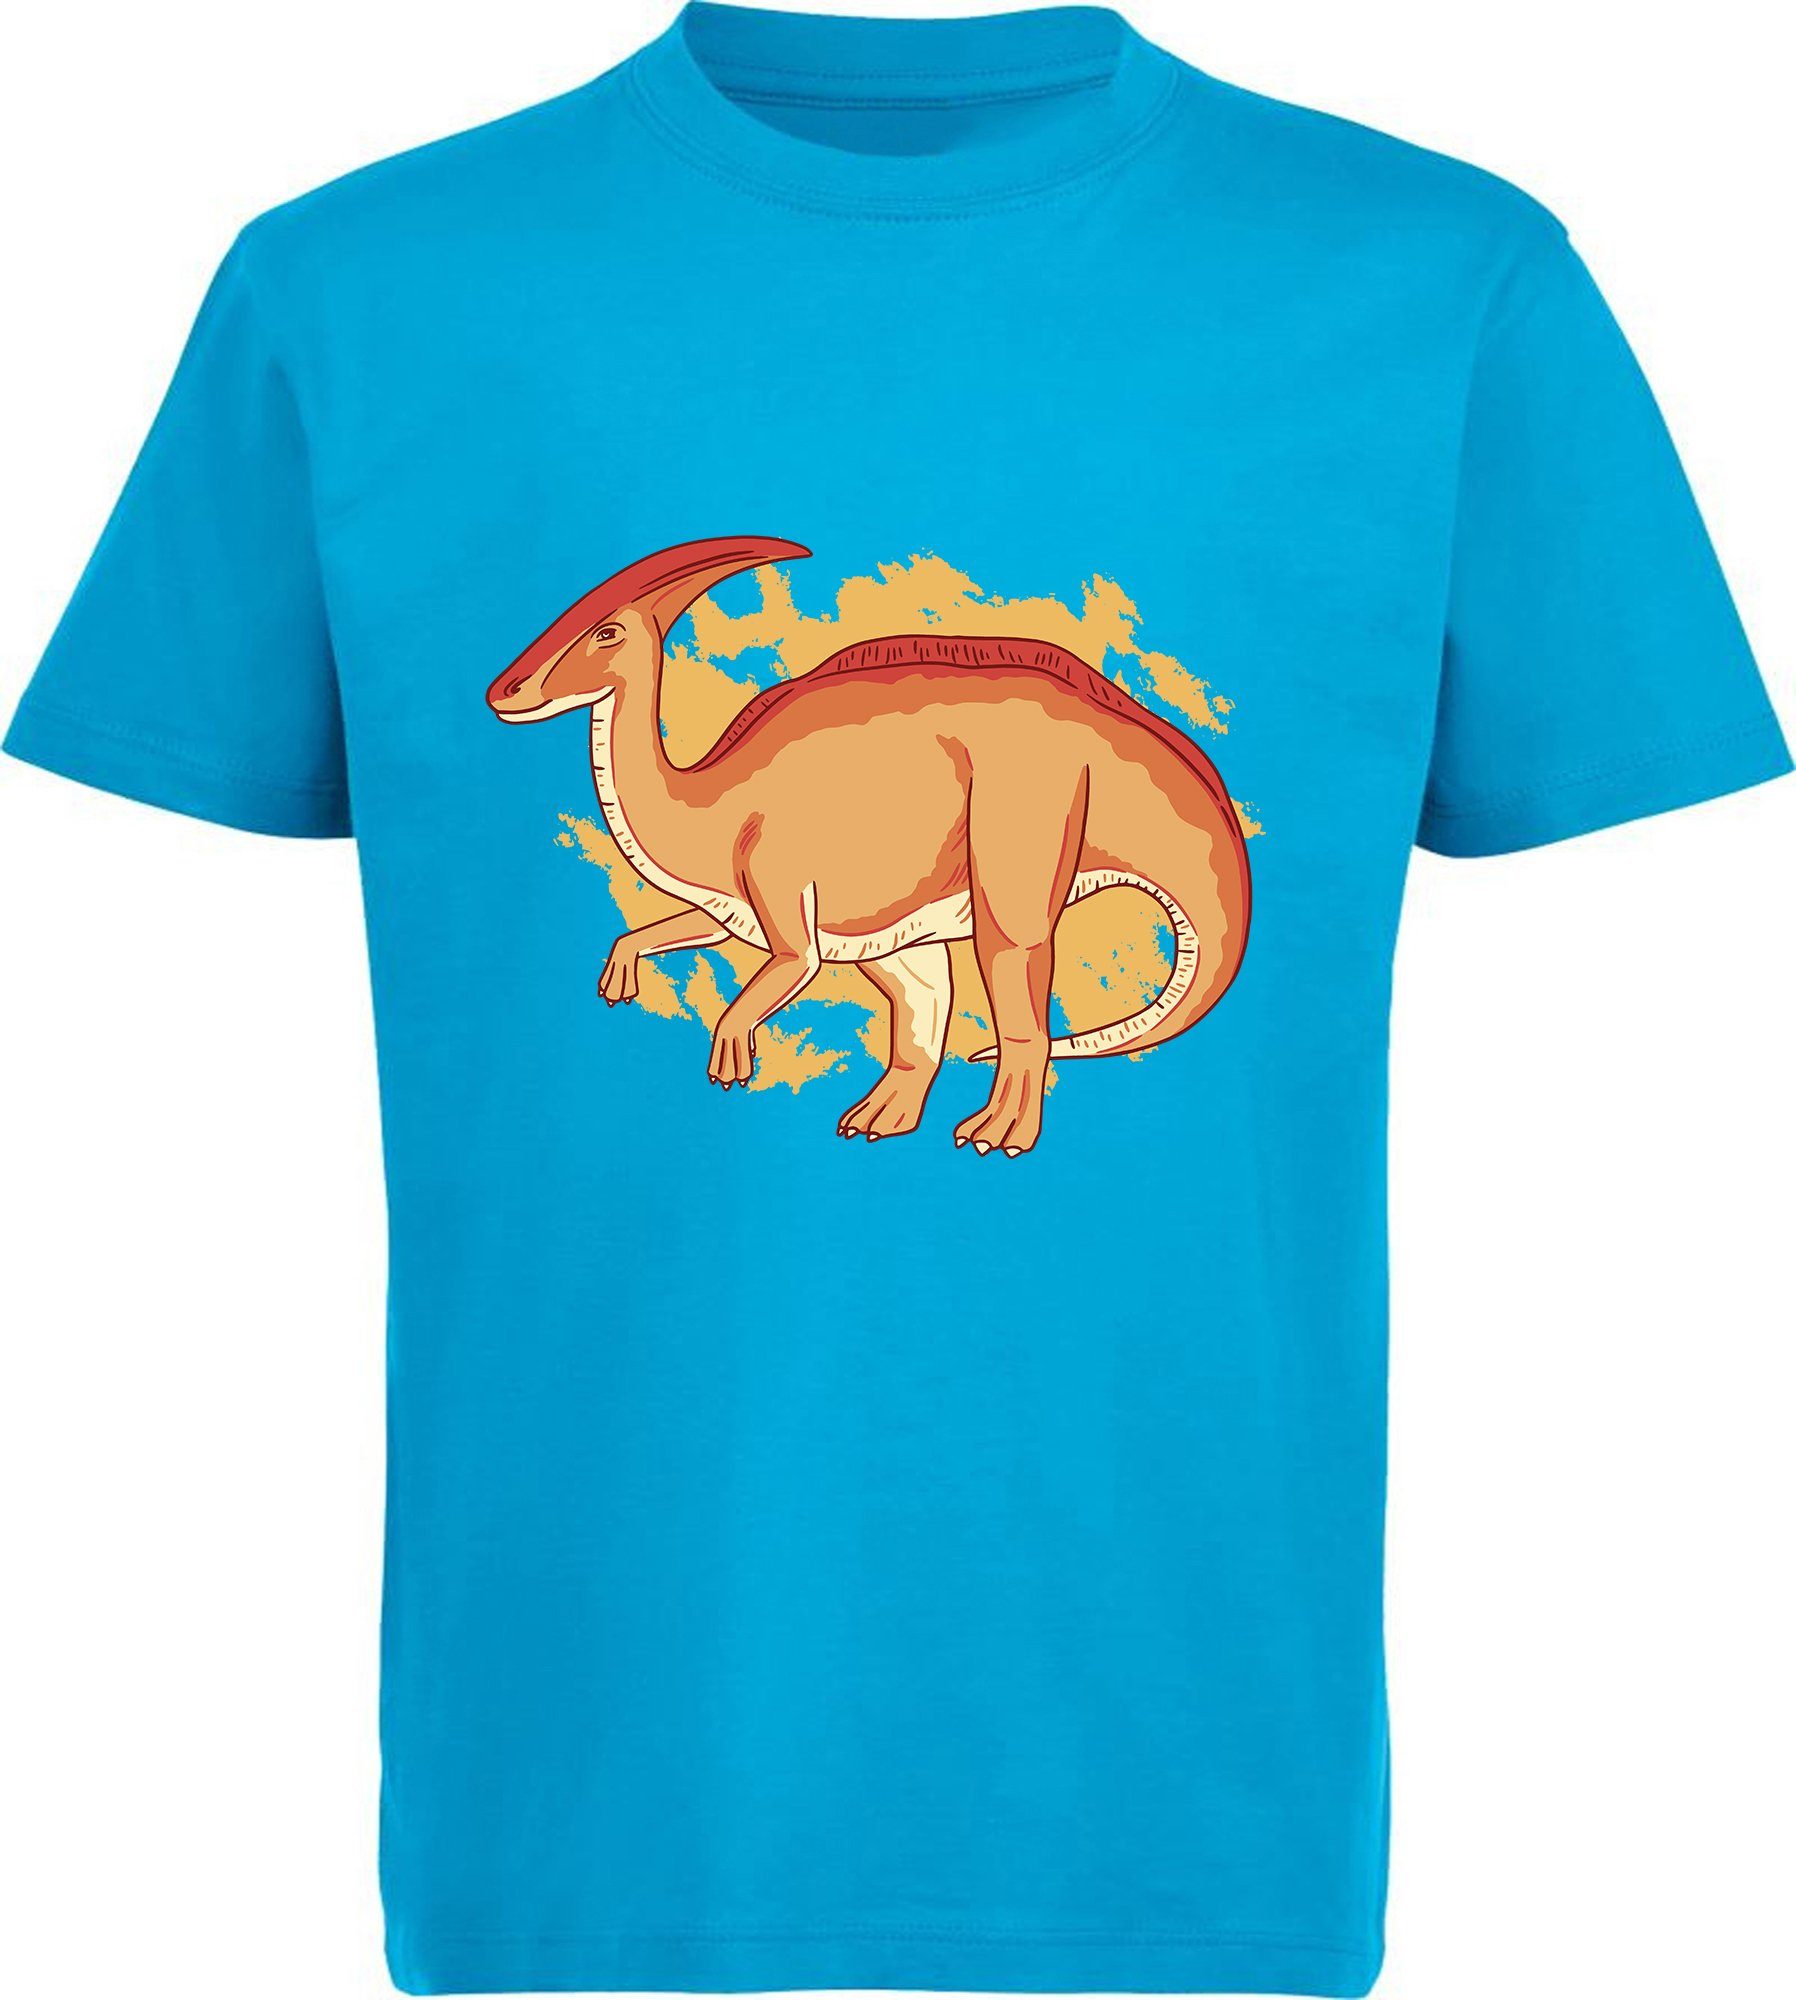 MyDesign24 Print-Shirt bedrucktes Kinder T-Shirt mit Baumwollshirt schwarz, Dino, rot, aqua blau blau, mit i86 weiß, Parasaurolophus